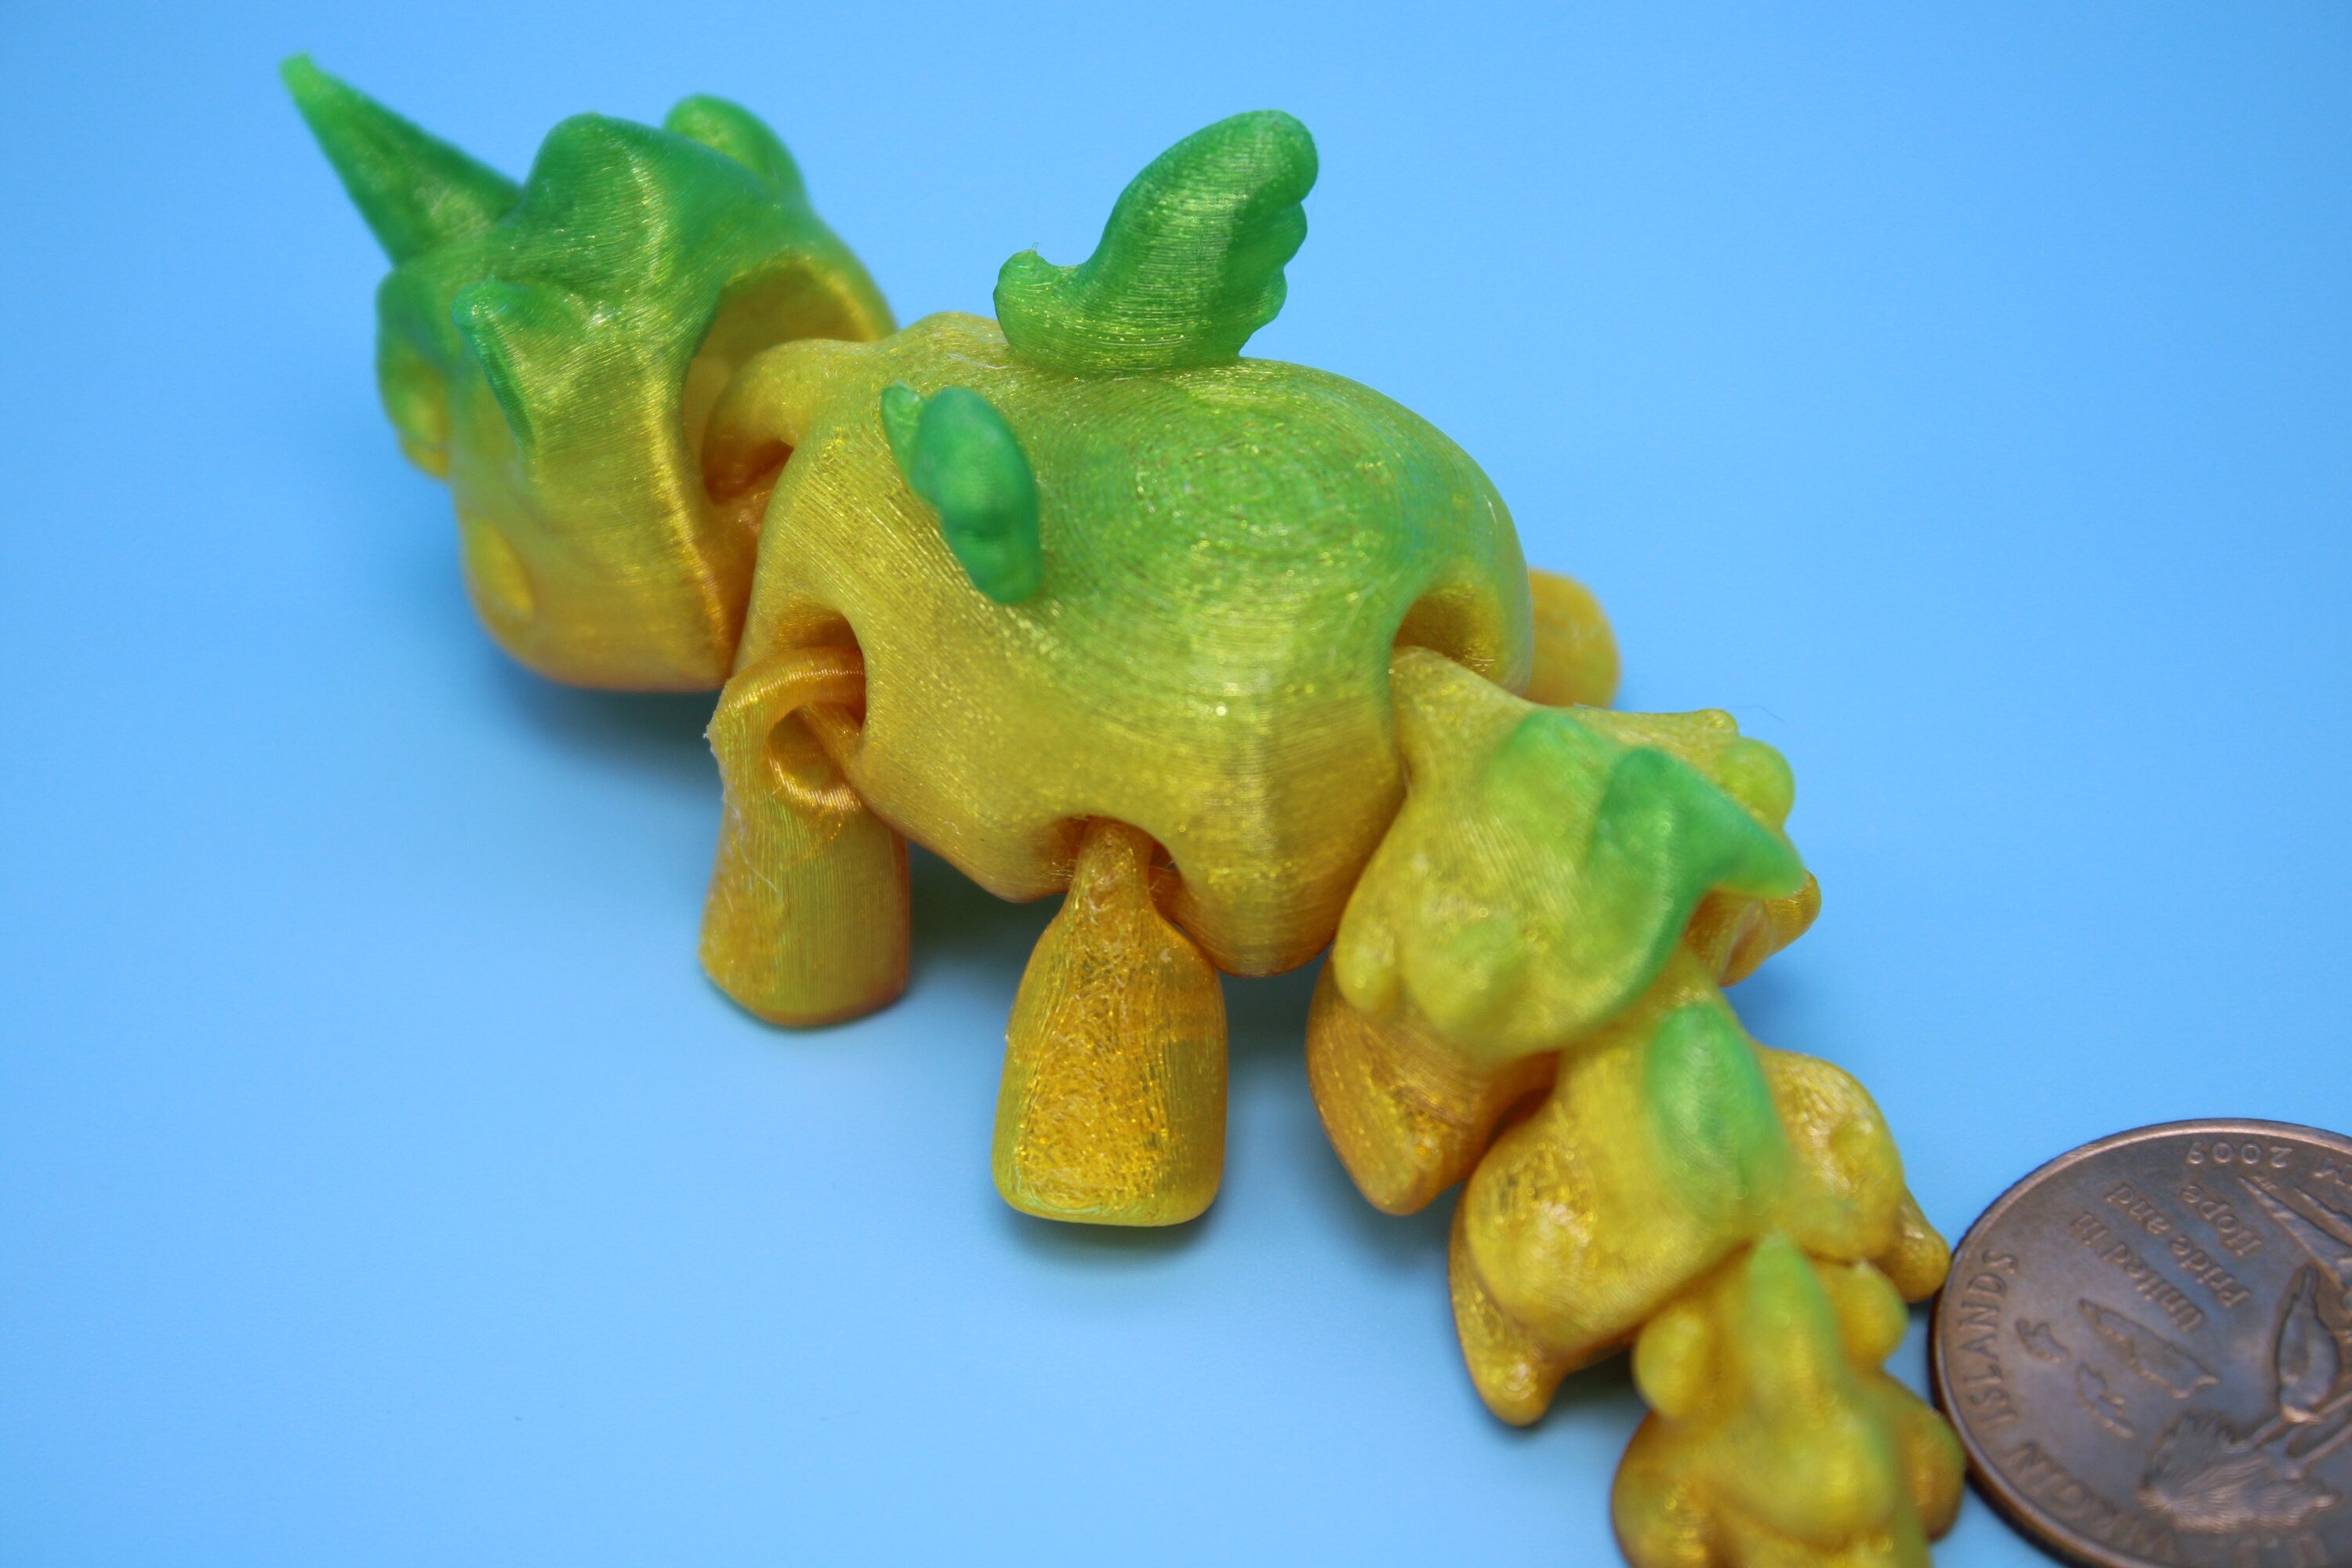 Unicorn with Wings | Flexible (TPU) | 3D Printed | Miniature Cute Unicorn | Sensory Toy | Fidget Toy.